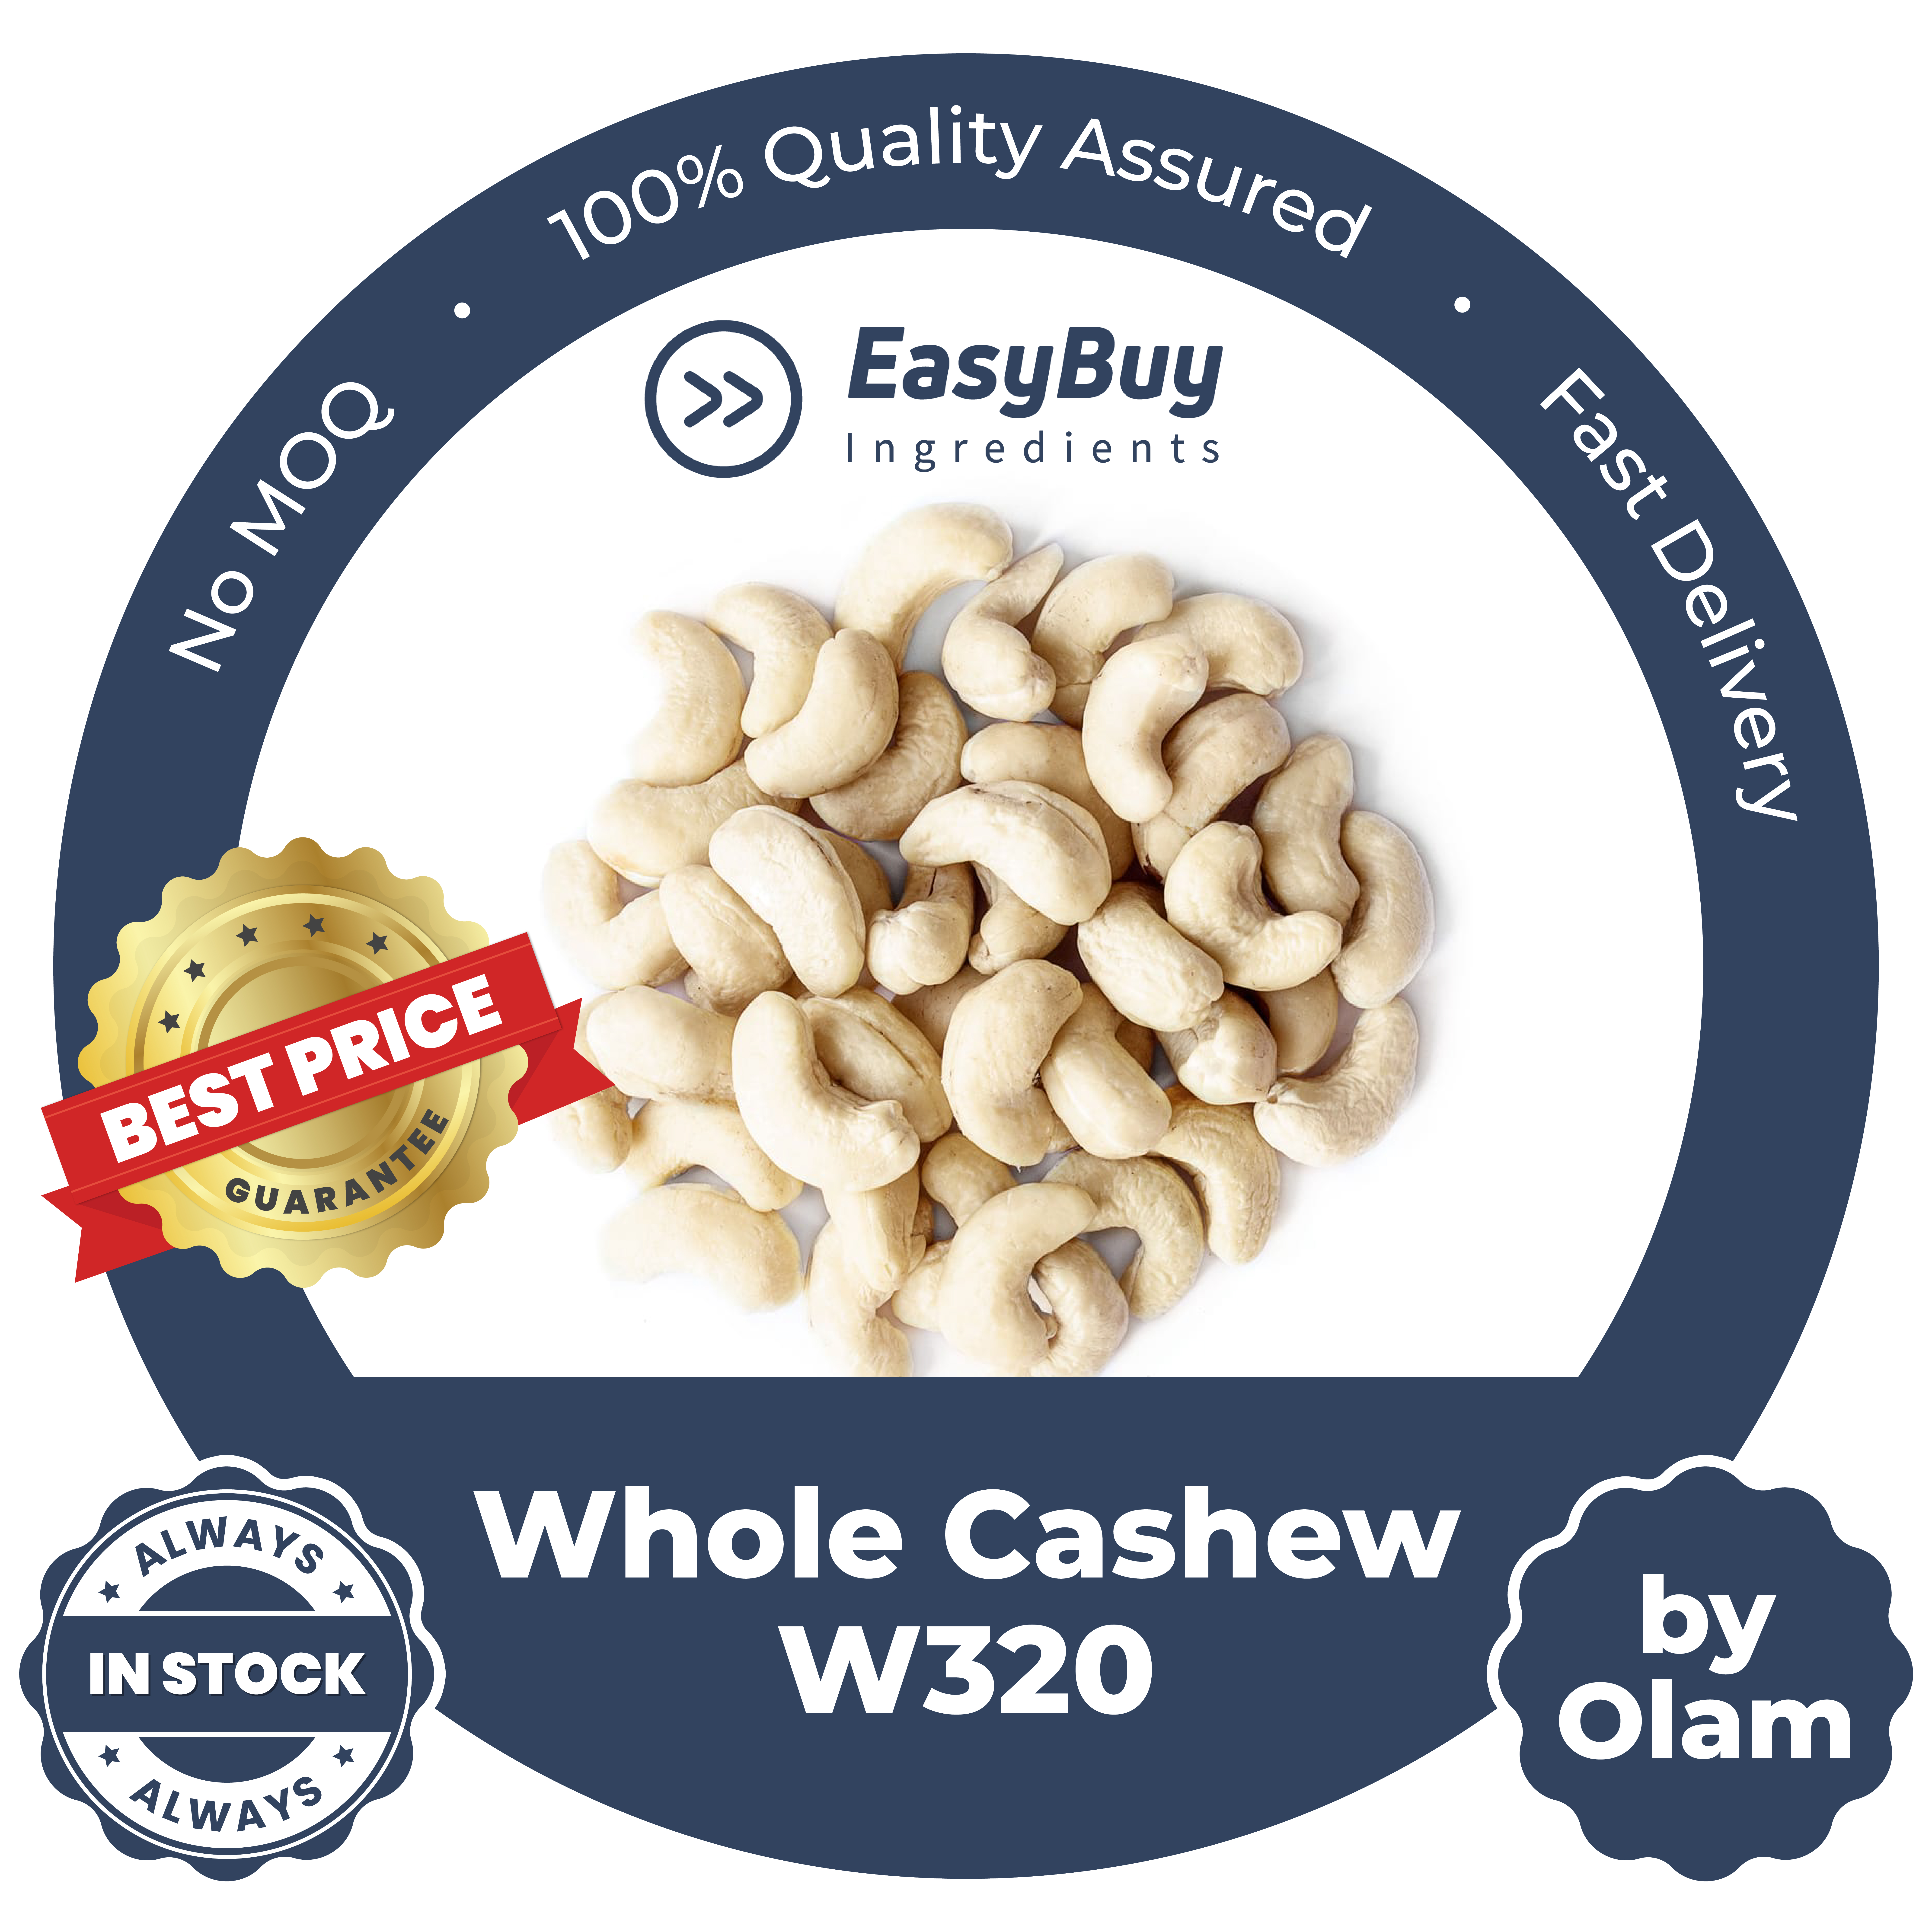 Whole Cashew W320 by Olam